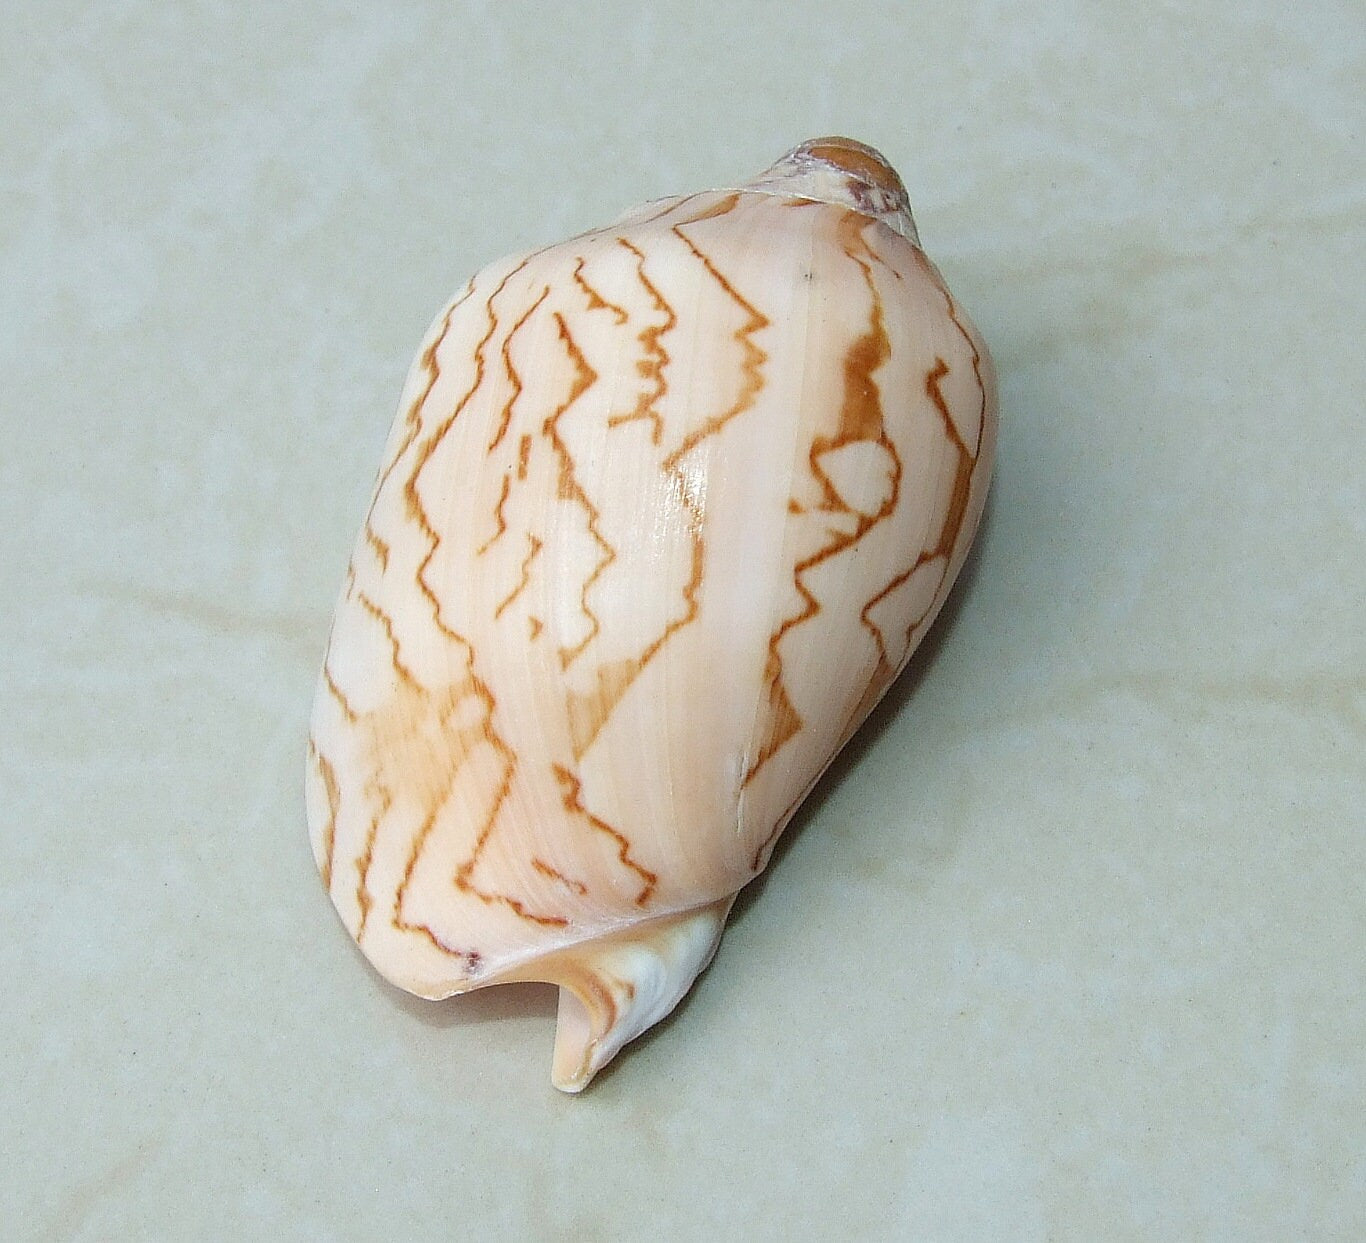 Voluta Nobilis Natural Seashell, Spiral Shell Bead, Display Shell, Jewelry Shell, Conch Shell, Beach Decor, Ocean Shells - 75-80mm - VN1